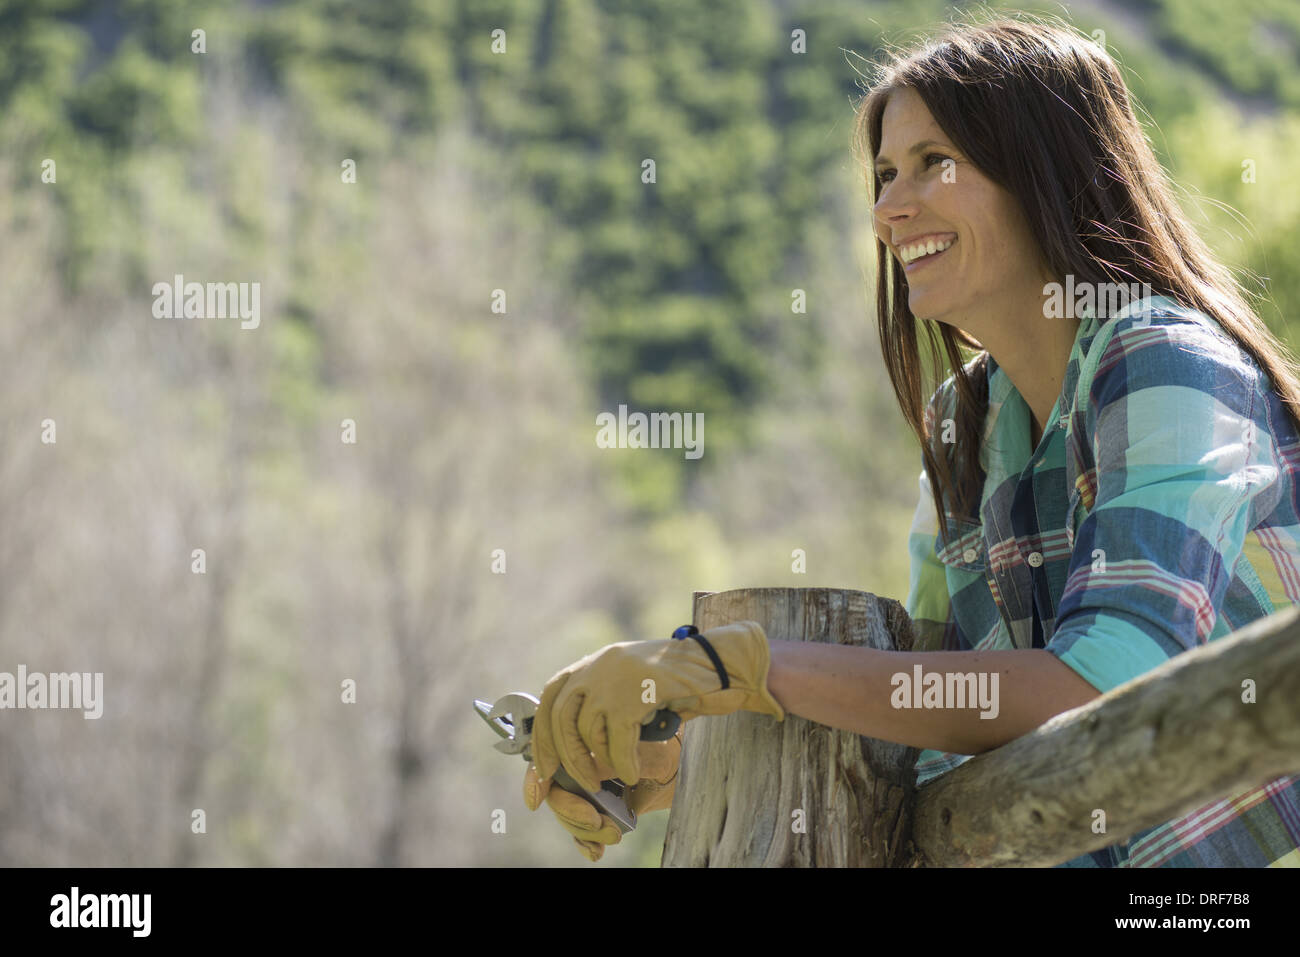 Utah USA woman with long black hair outdoors in fresh air Stock Photo